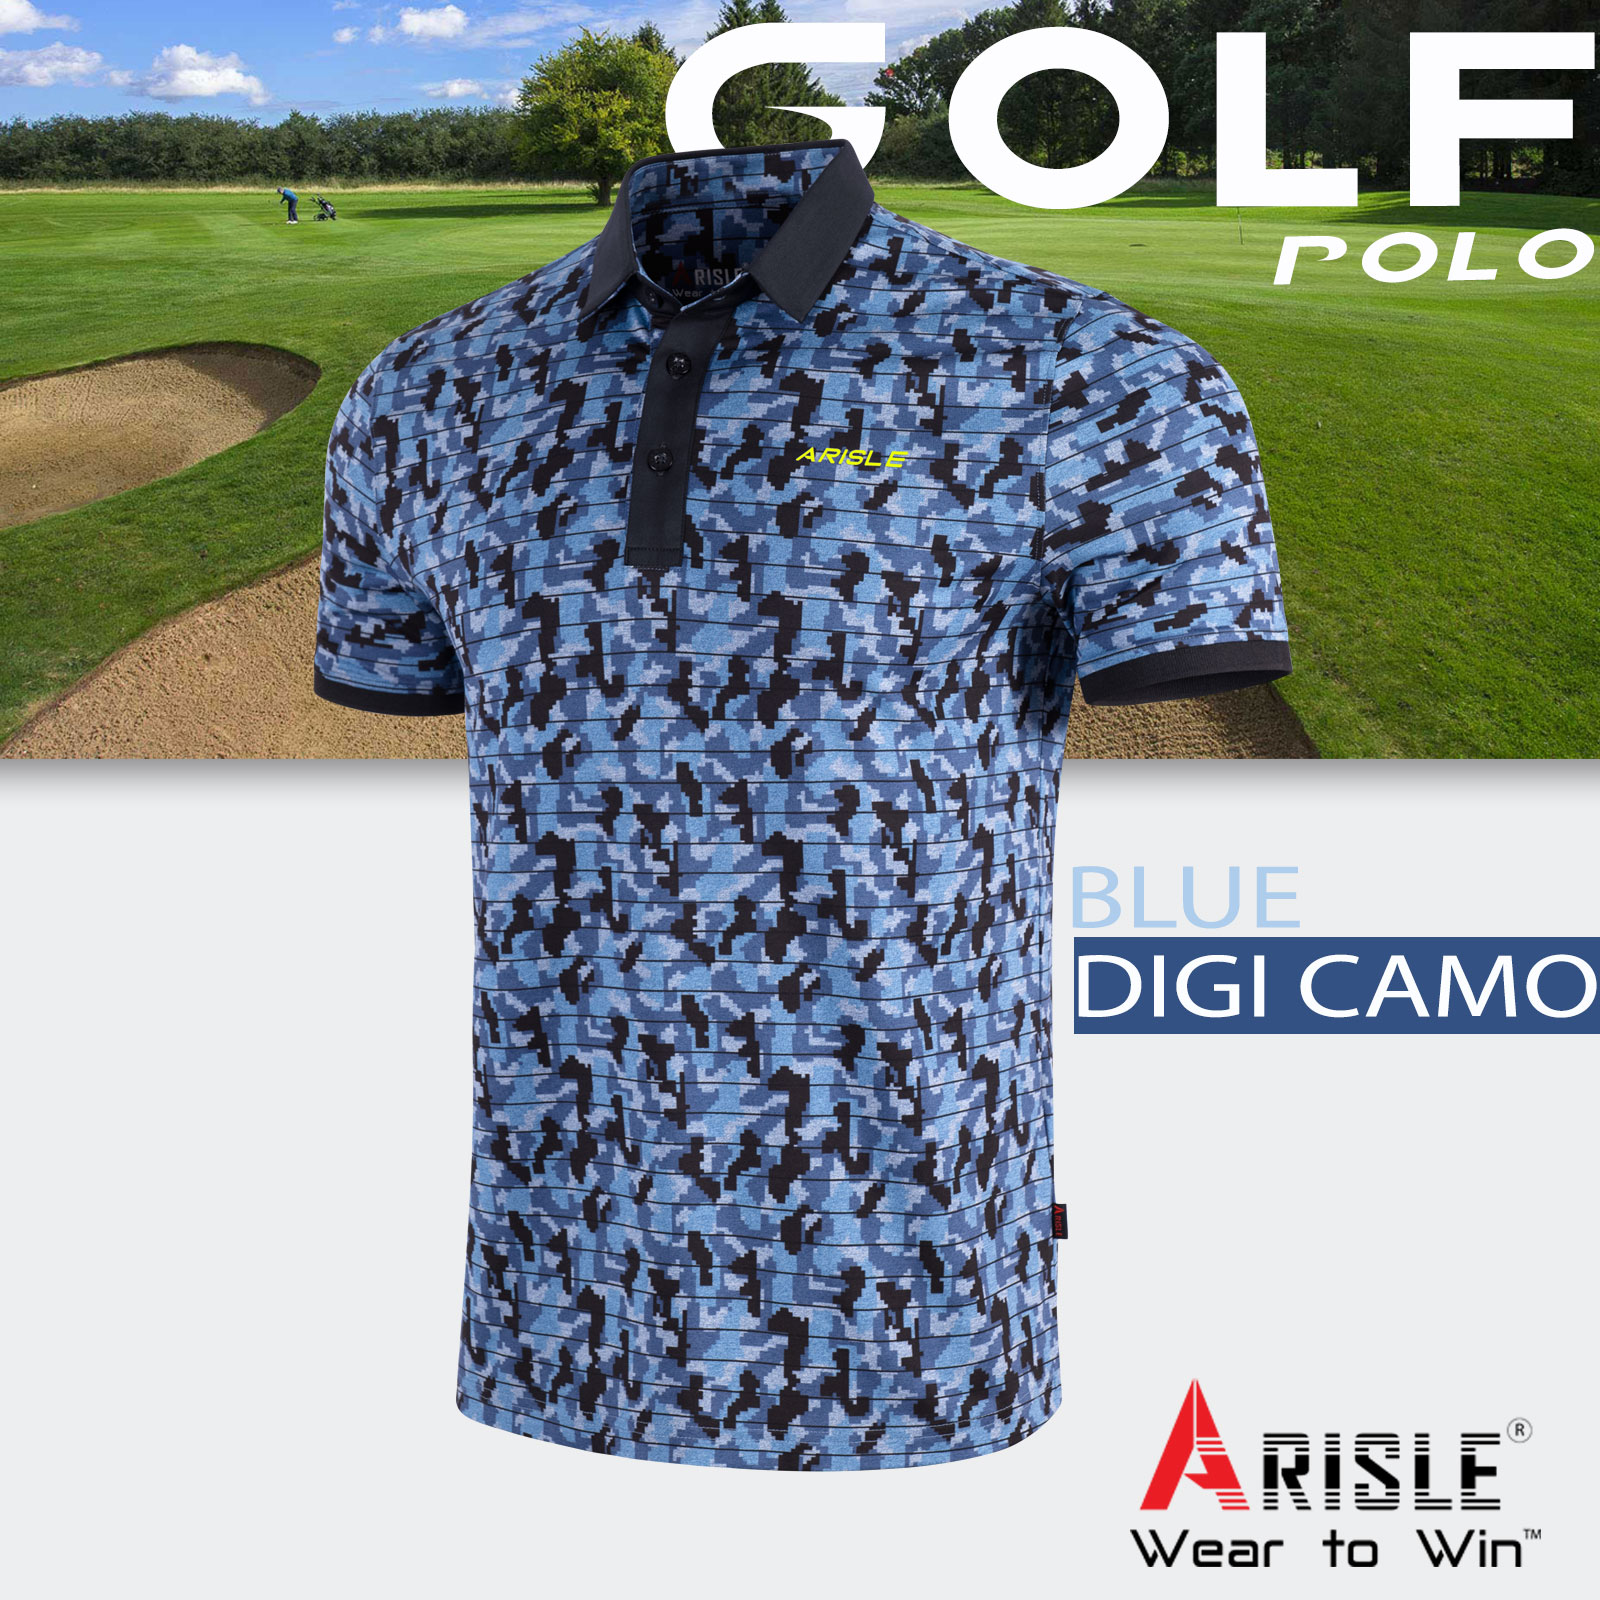 Ao-Polo-Golf-ARISLE-Blue-Camo-Stripe-14